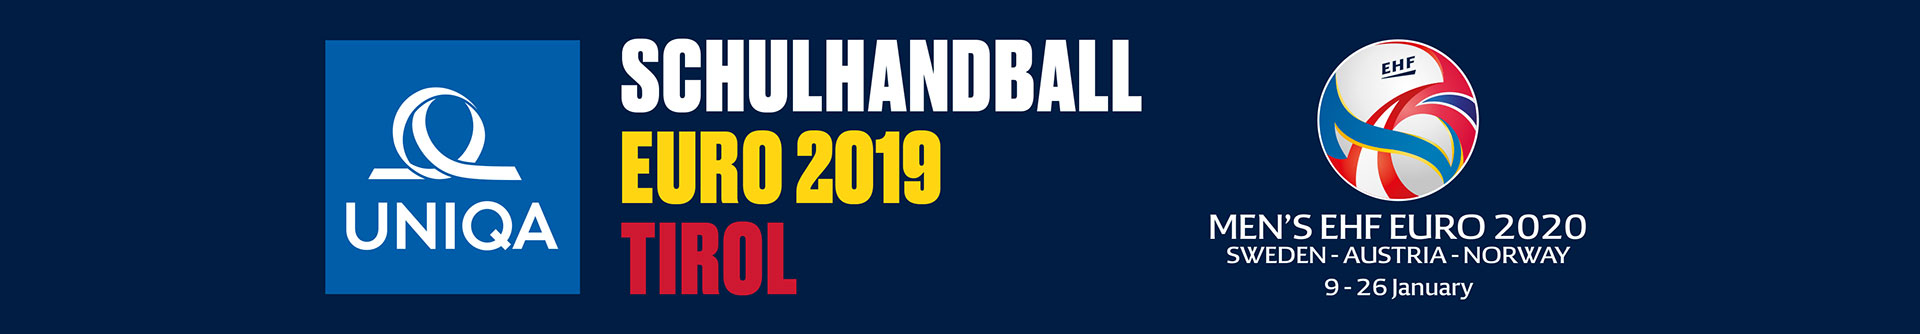 Schulhandball Euro 2019 Tirol